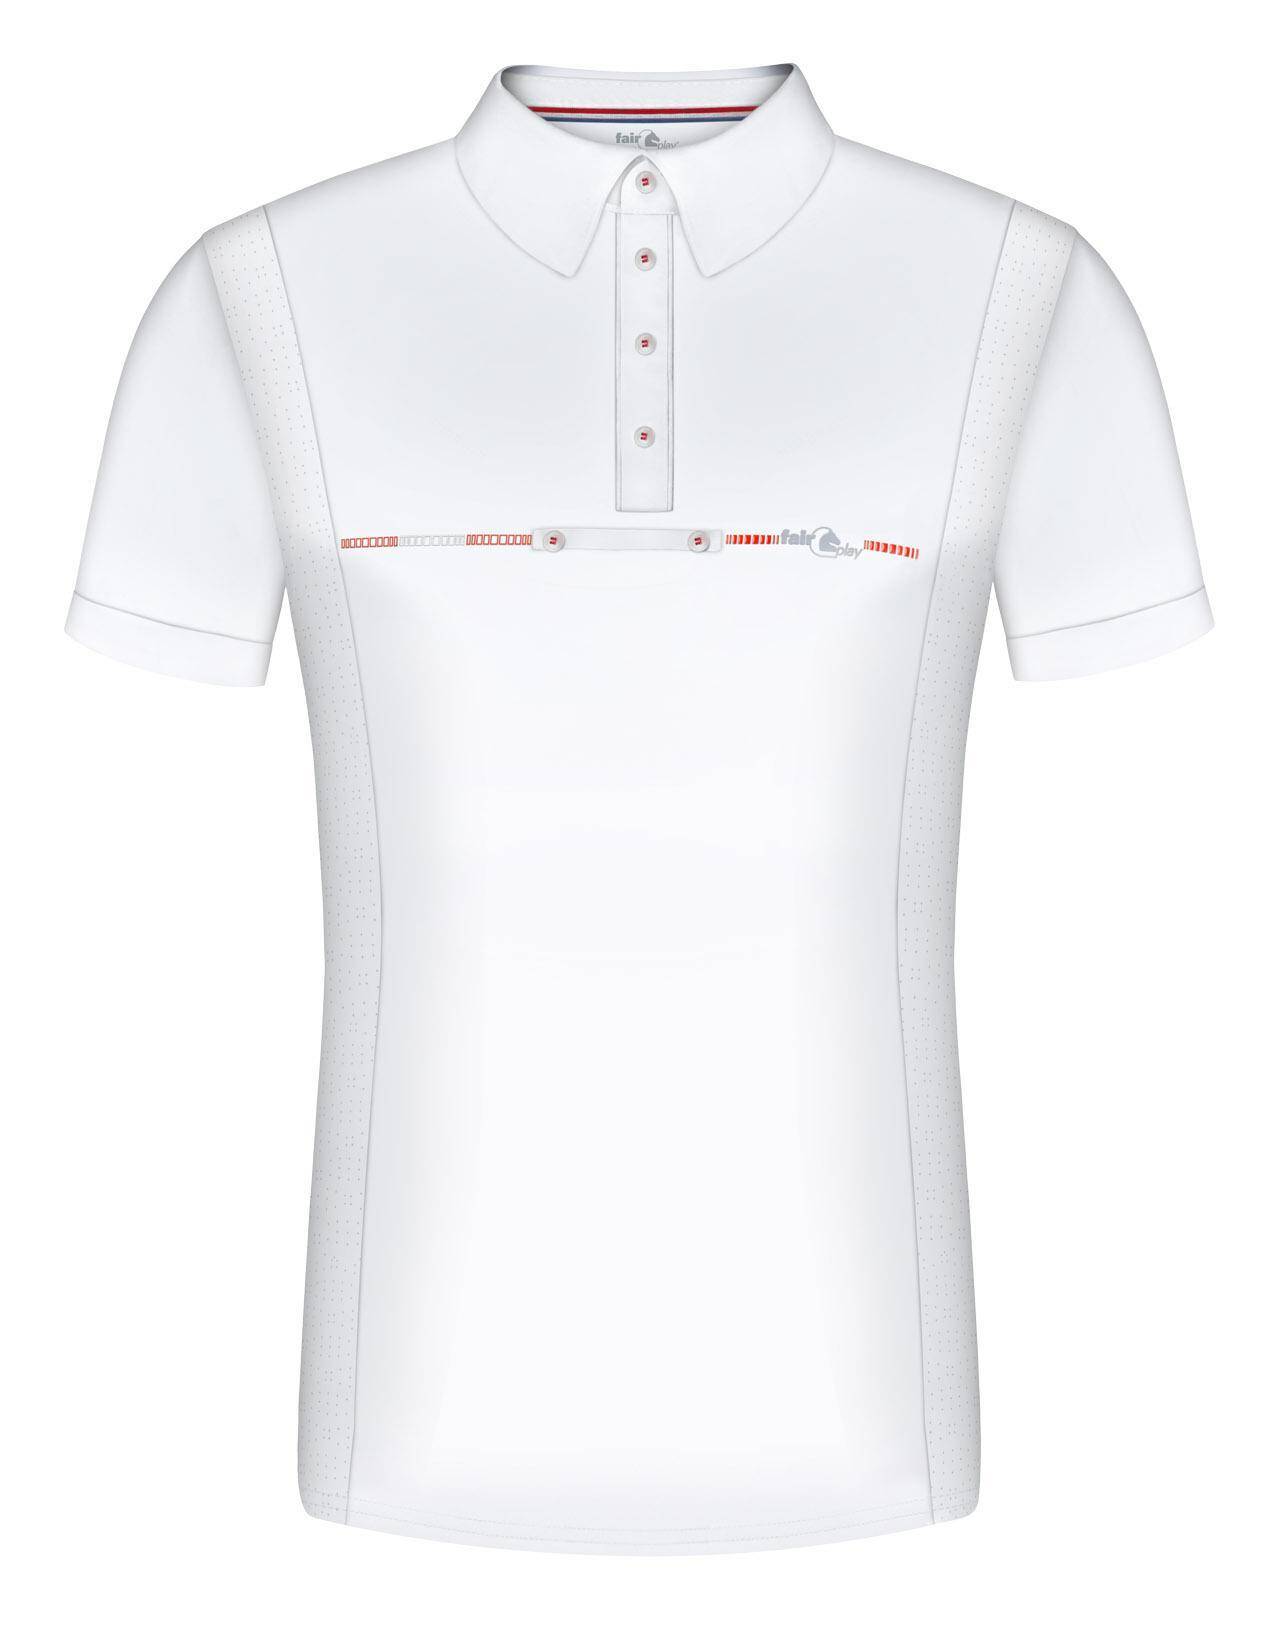 Koszulka konkursowa FP DAVID biały  50